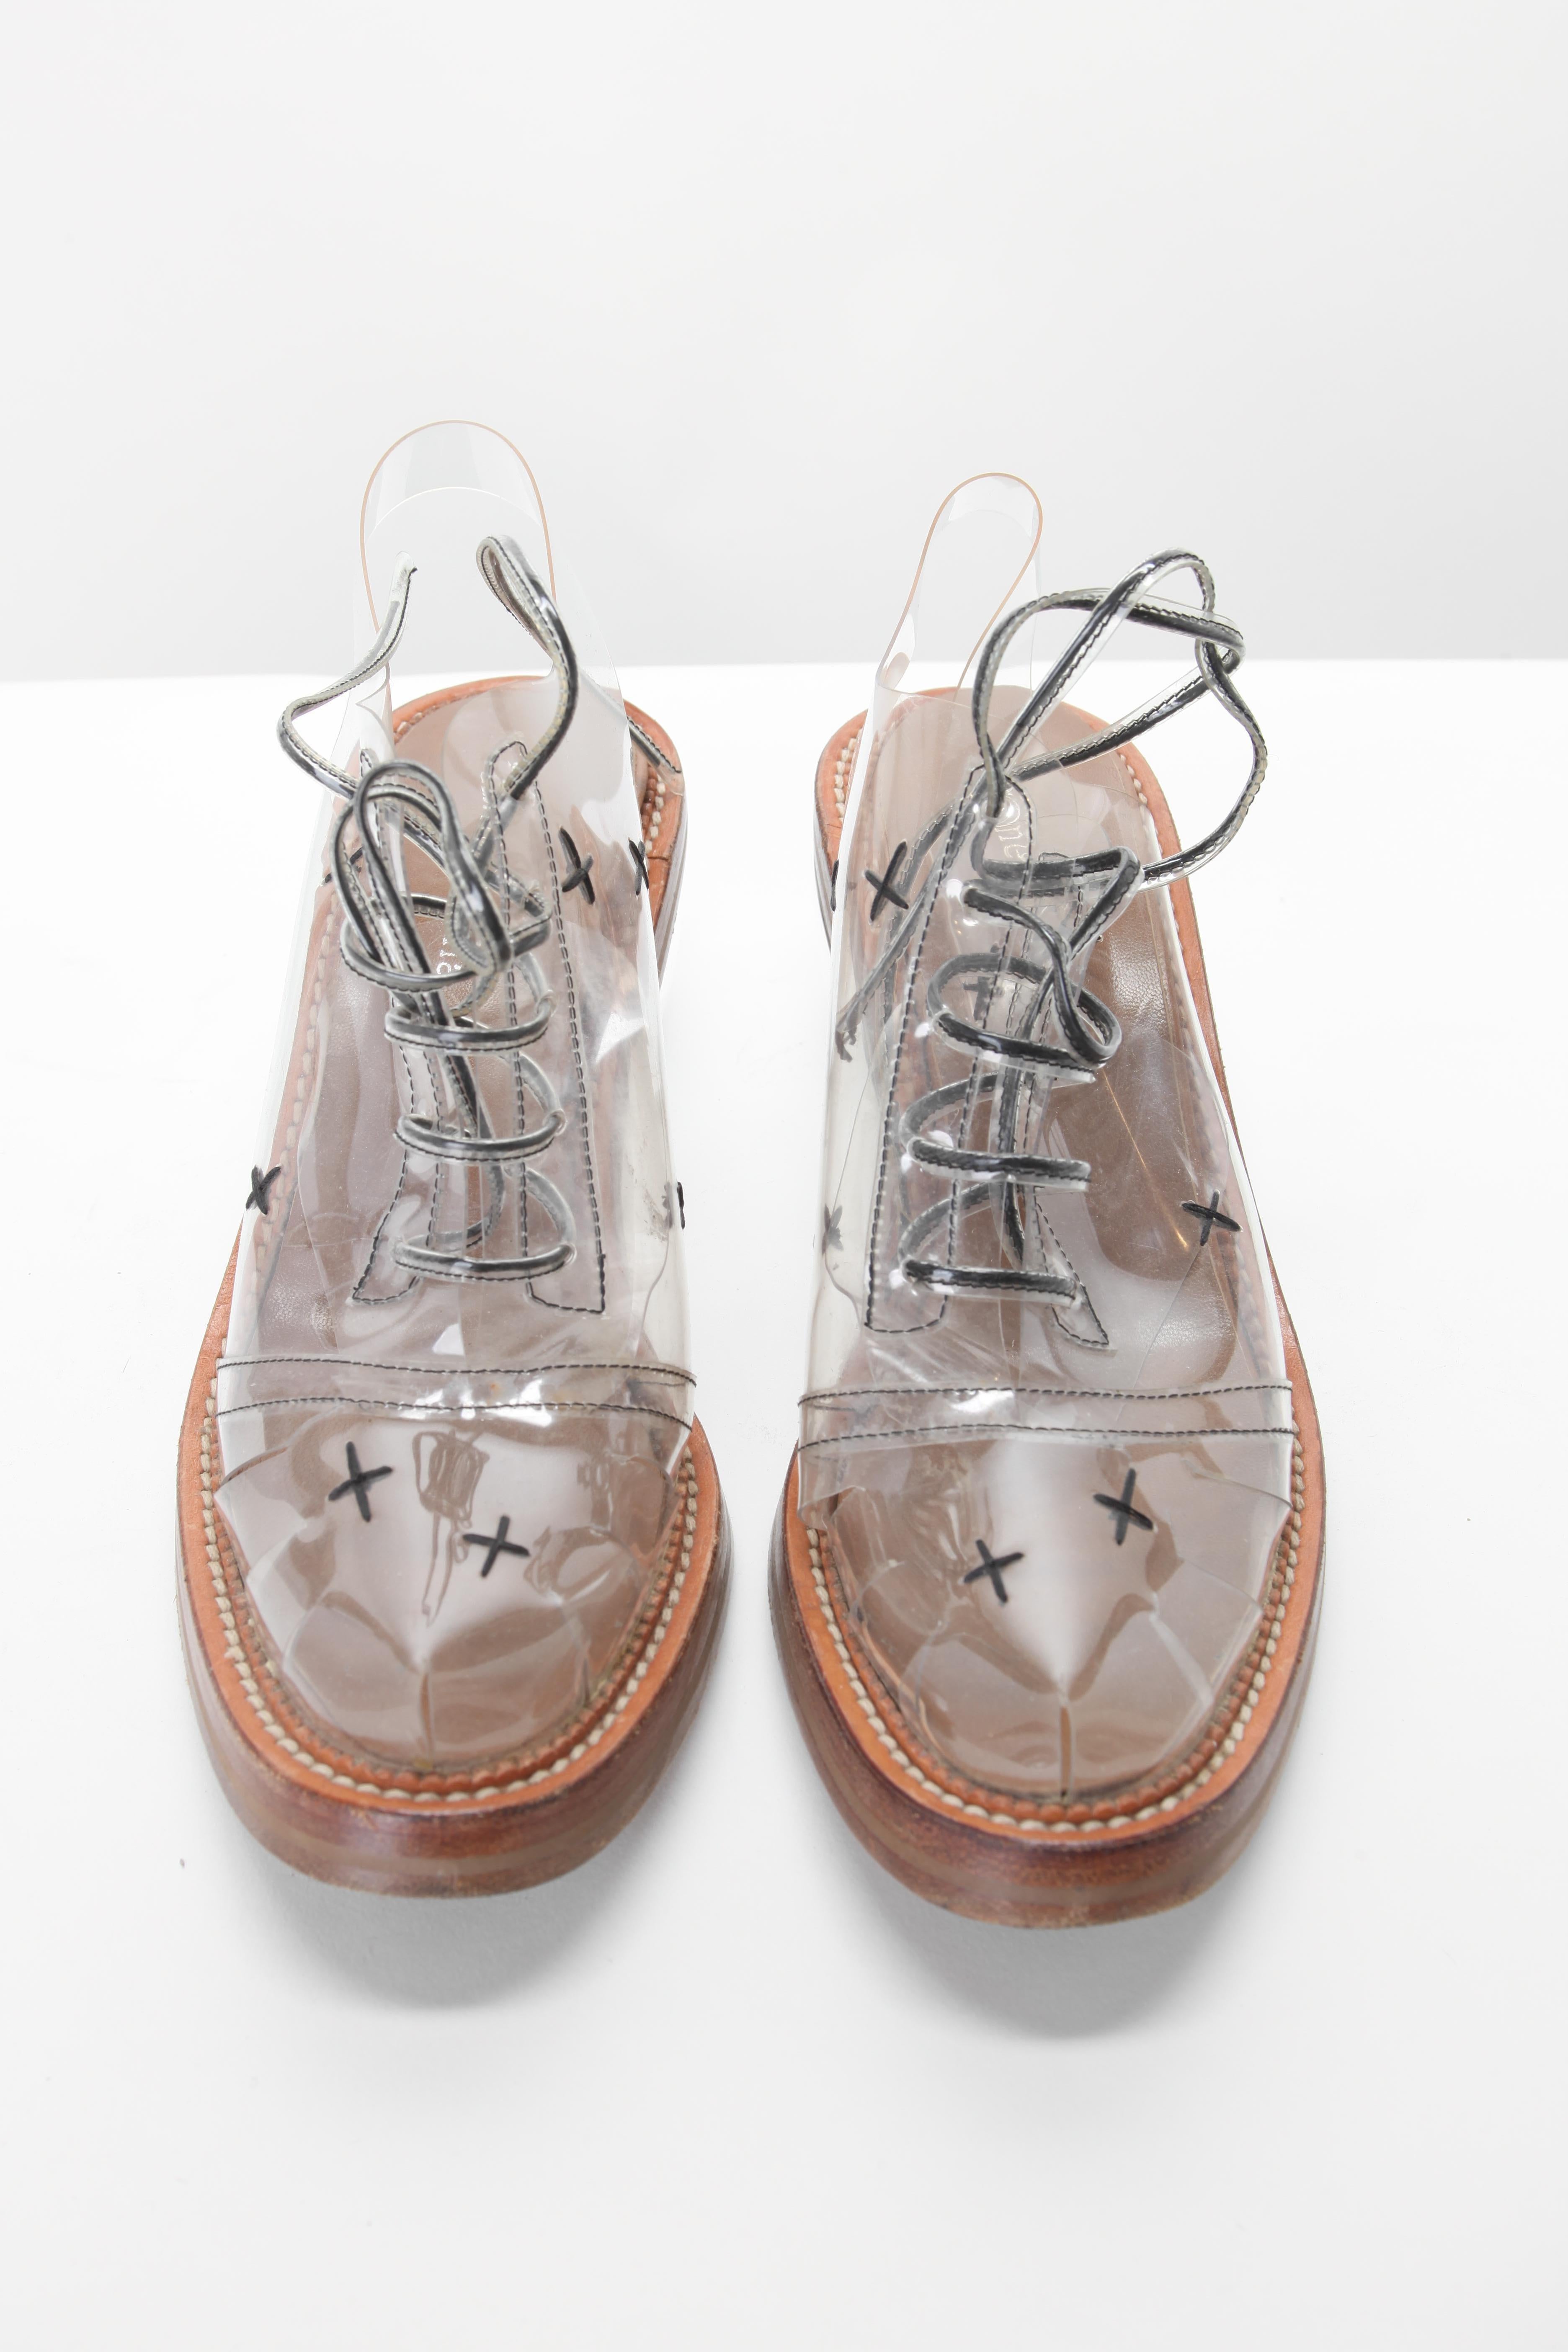 Gris Simone Rocha - Chaussures Oxford transparentes « Cindy Rella » EU 39 en vente